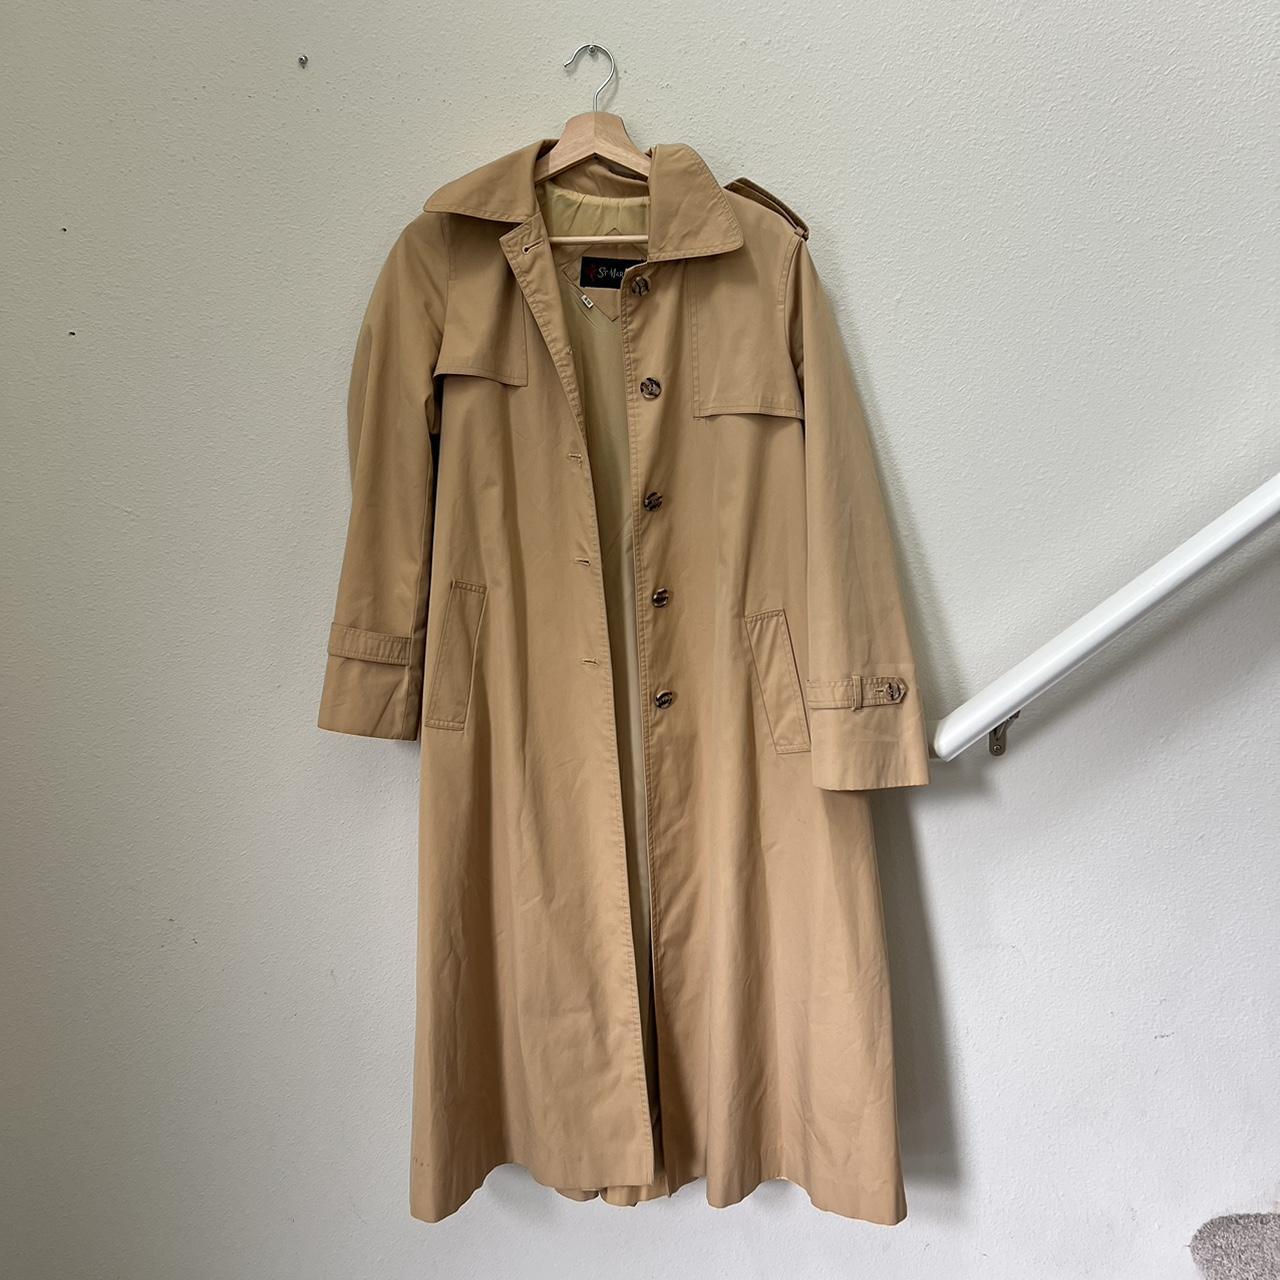 vintage trench coat size XS-M, depending on desired... - Depop